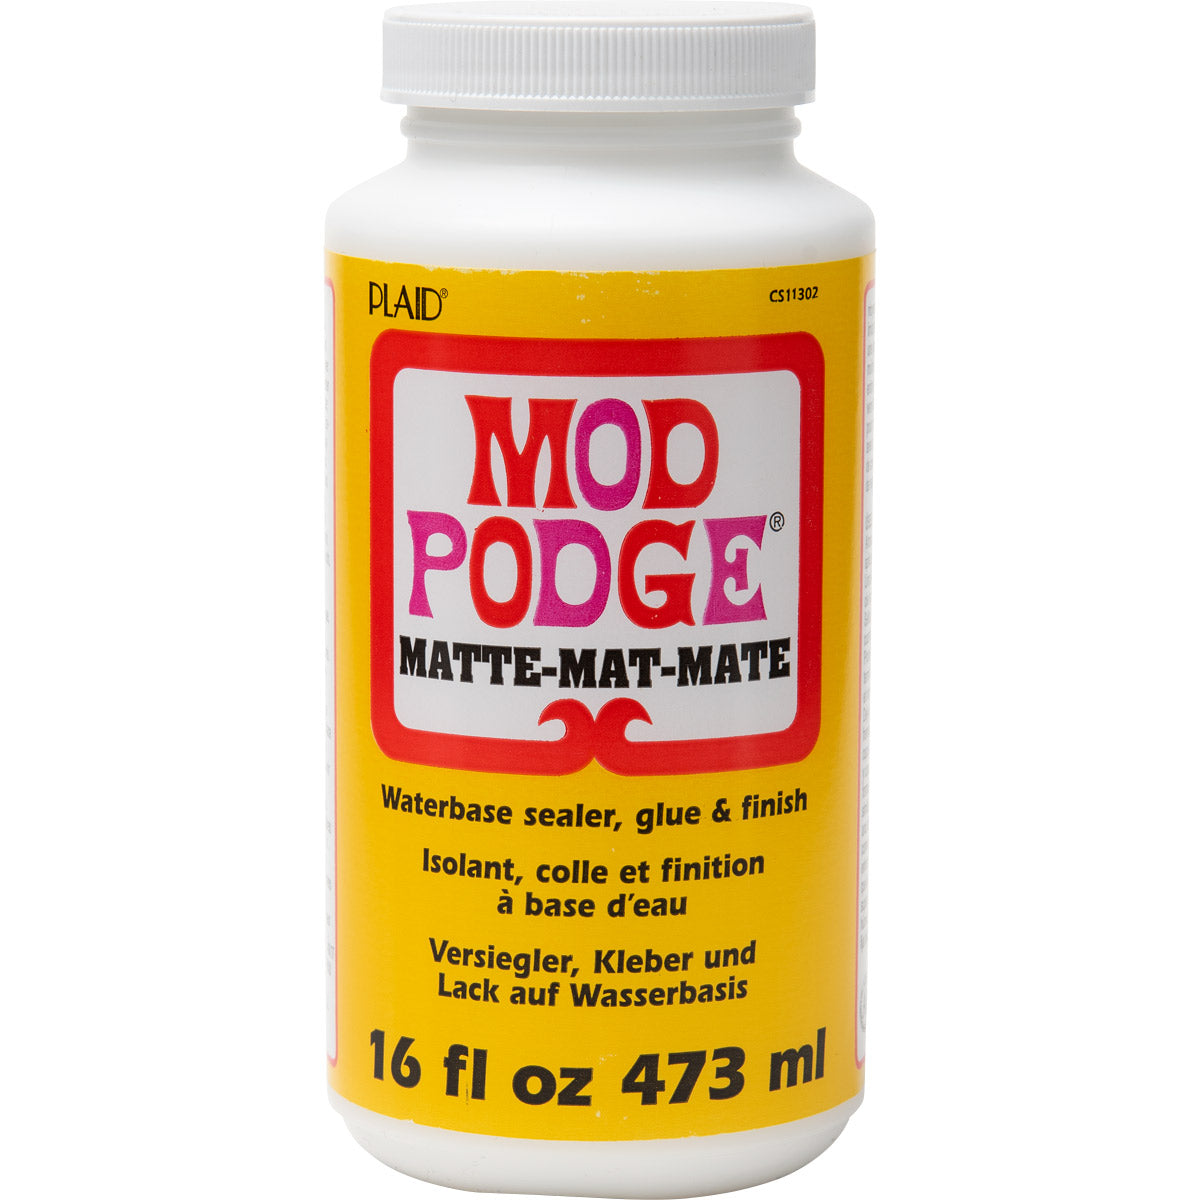 Mod Podge® Matte,  Various Sizes